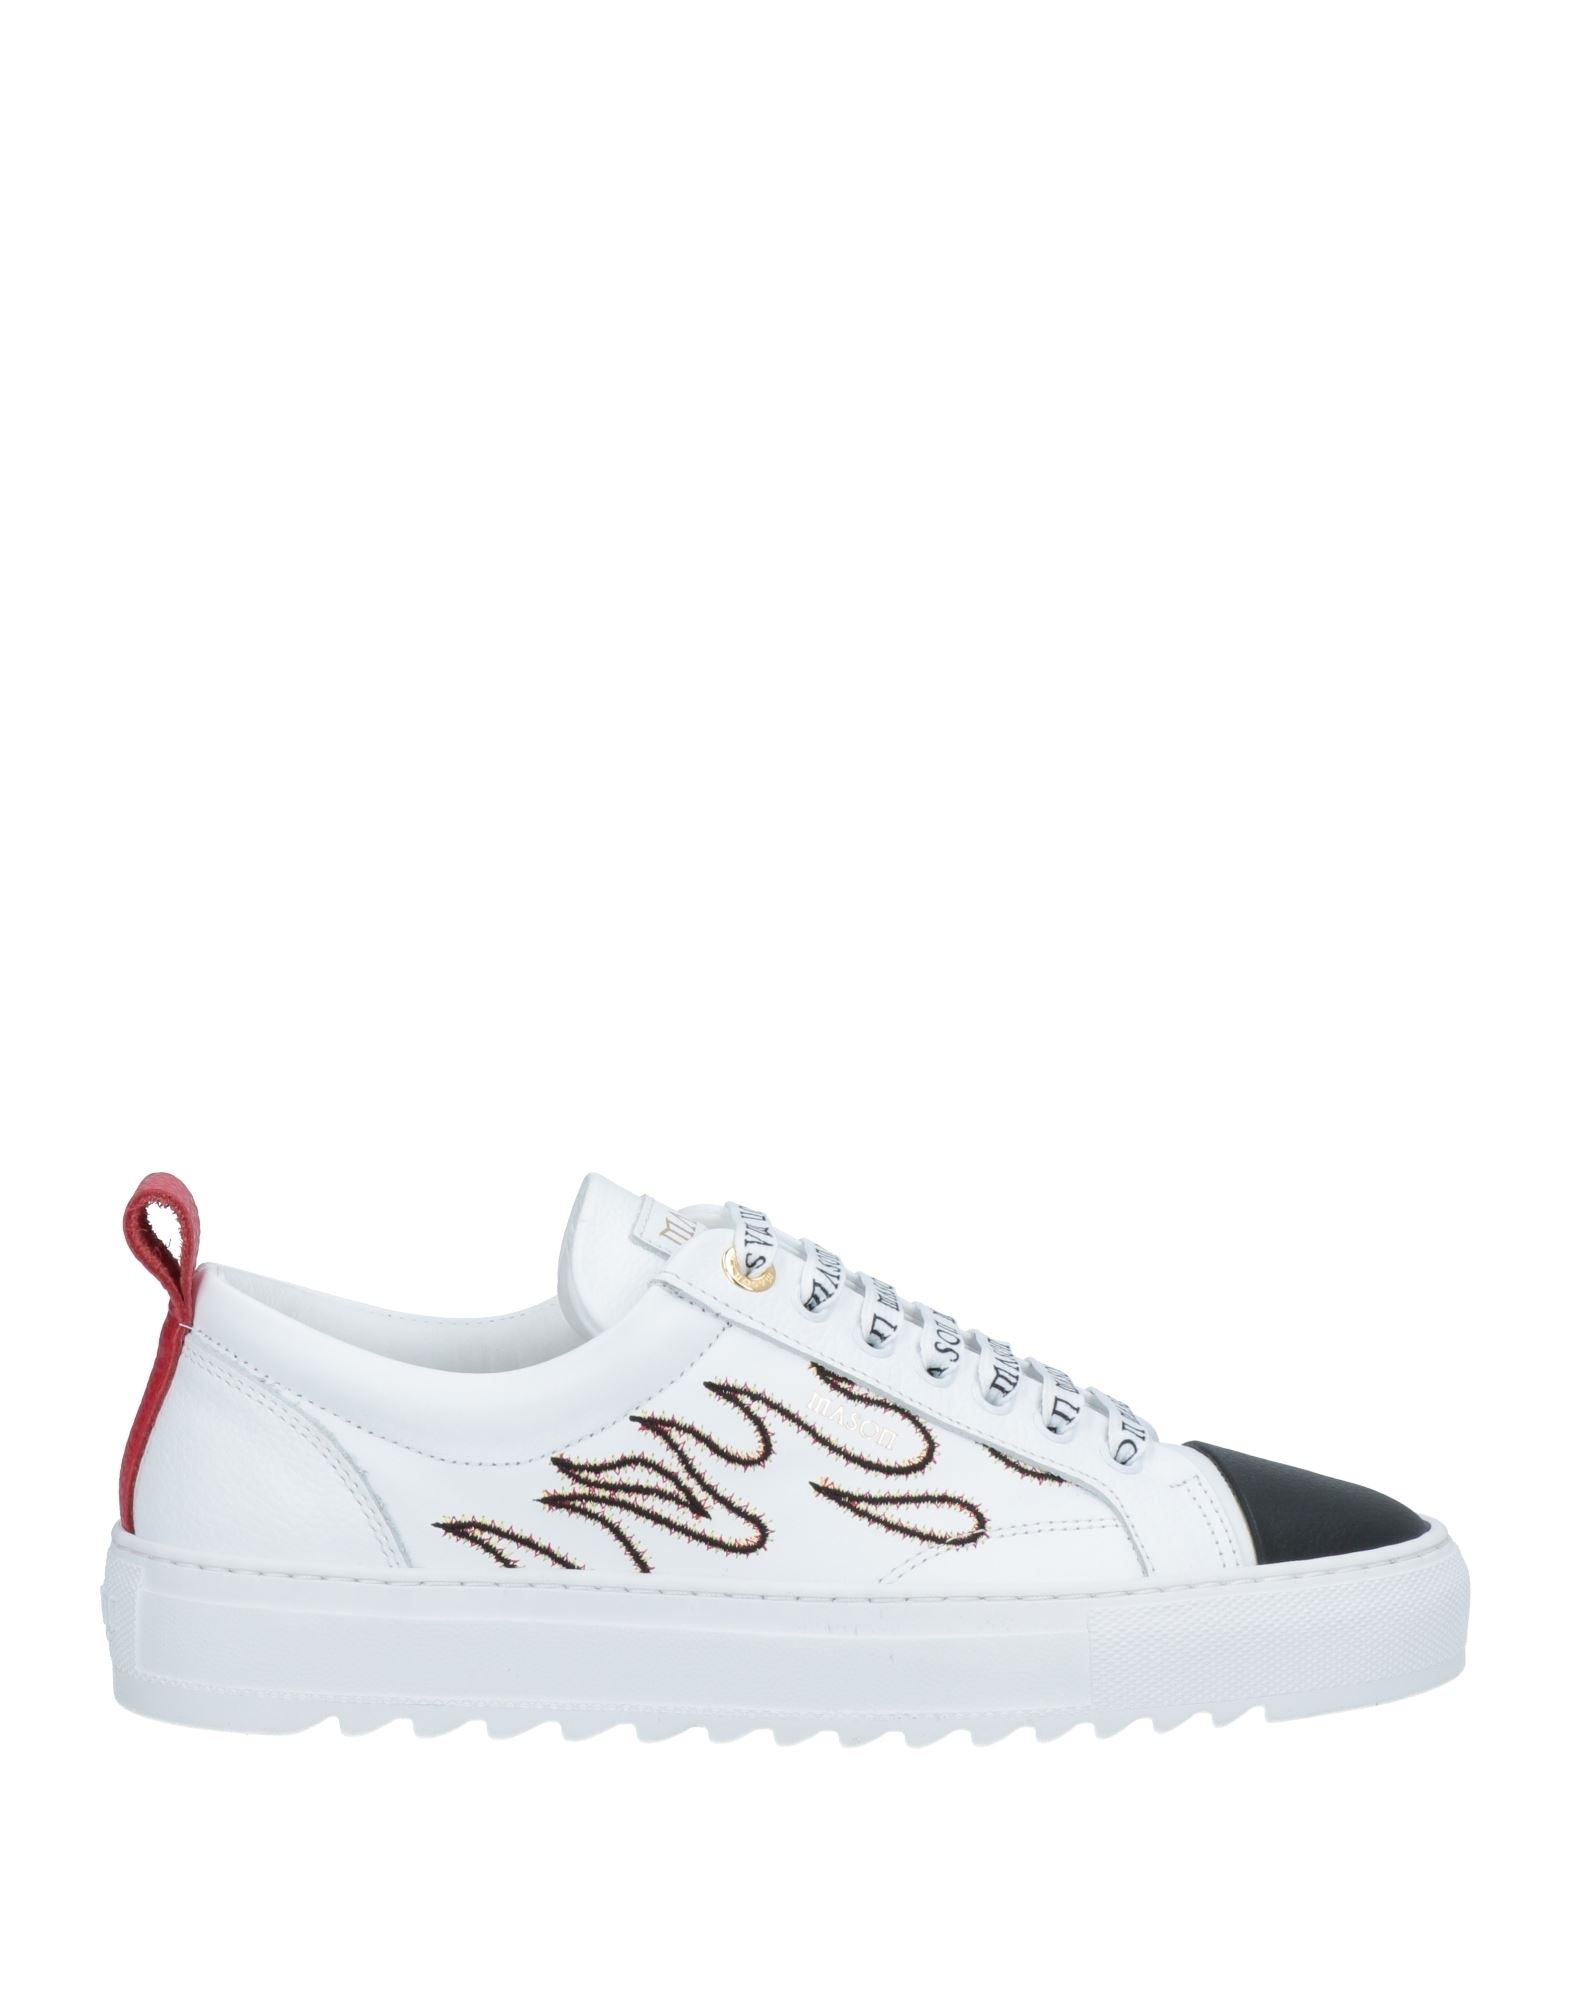 Mason Garments Sneakers In White